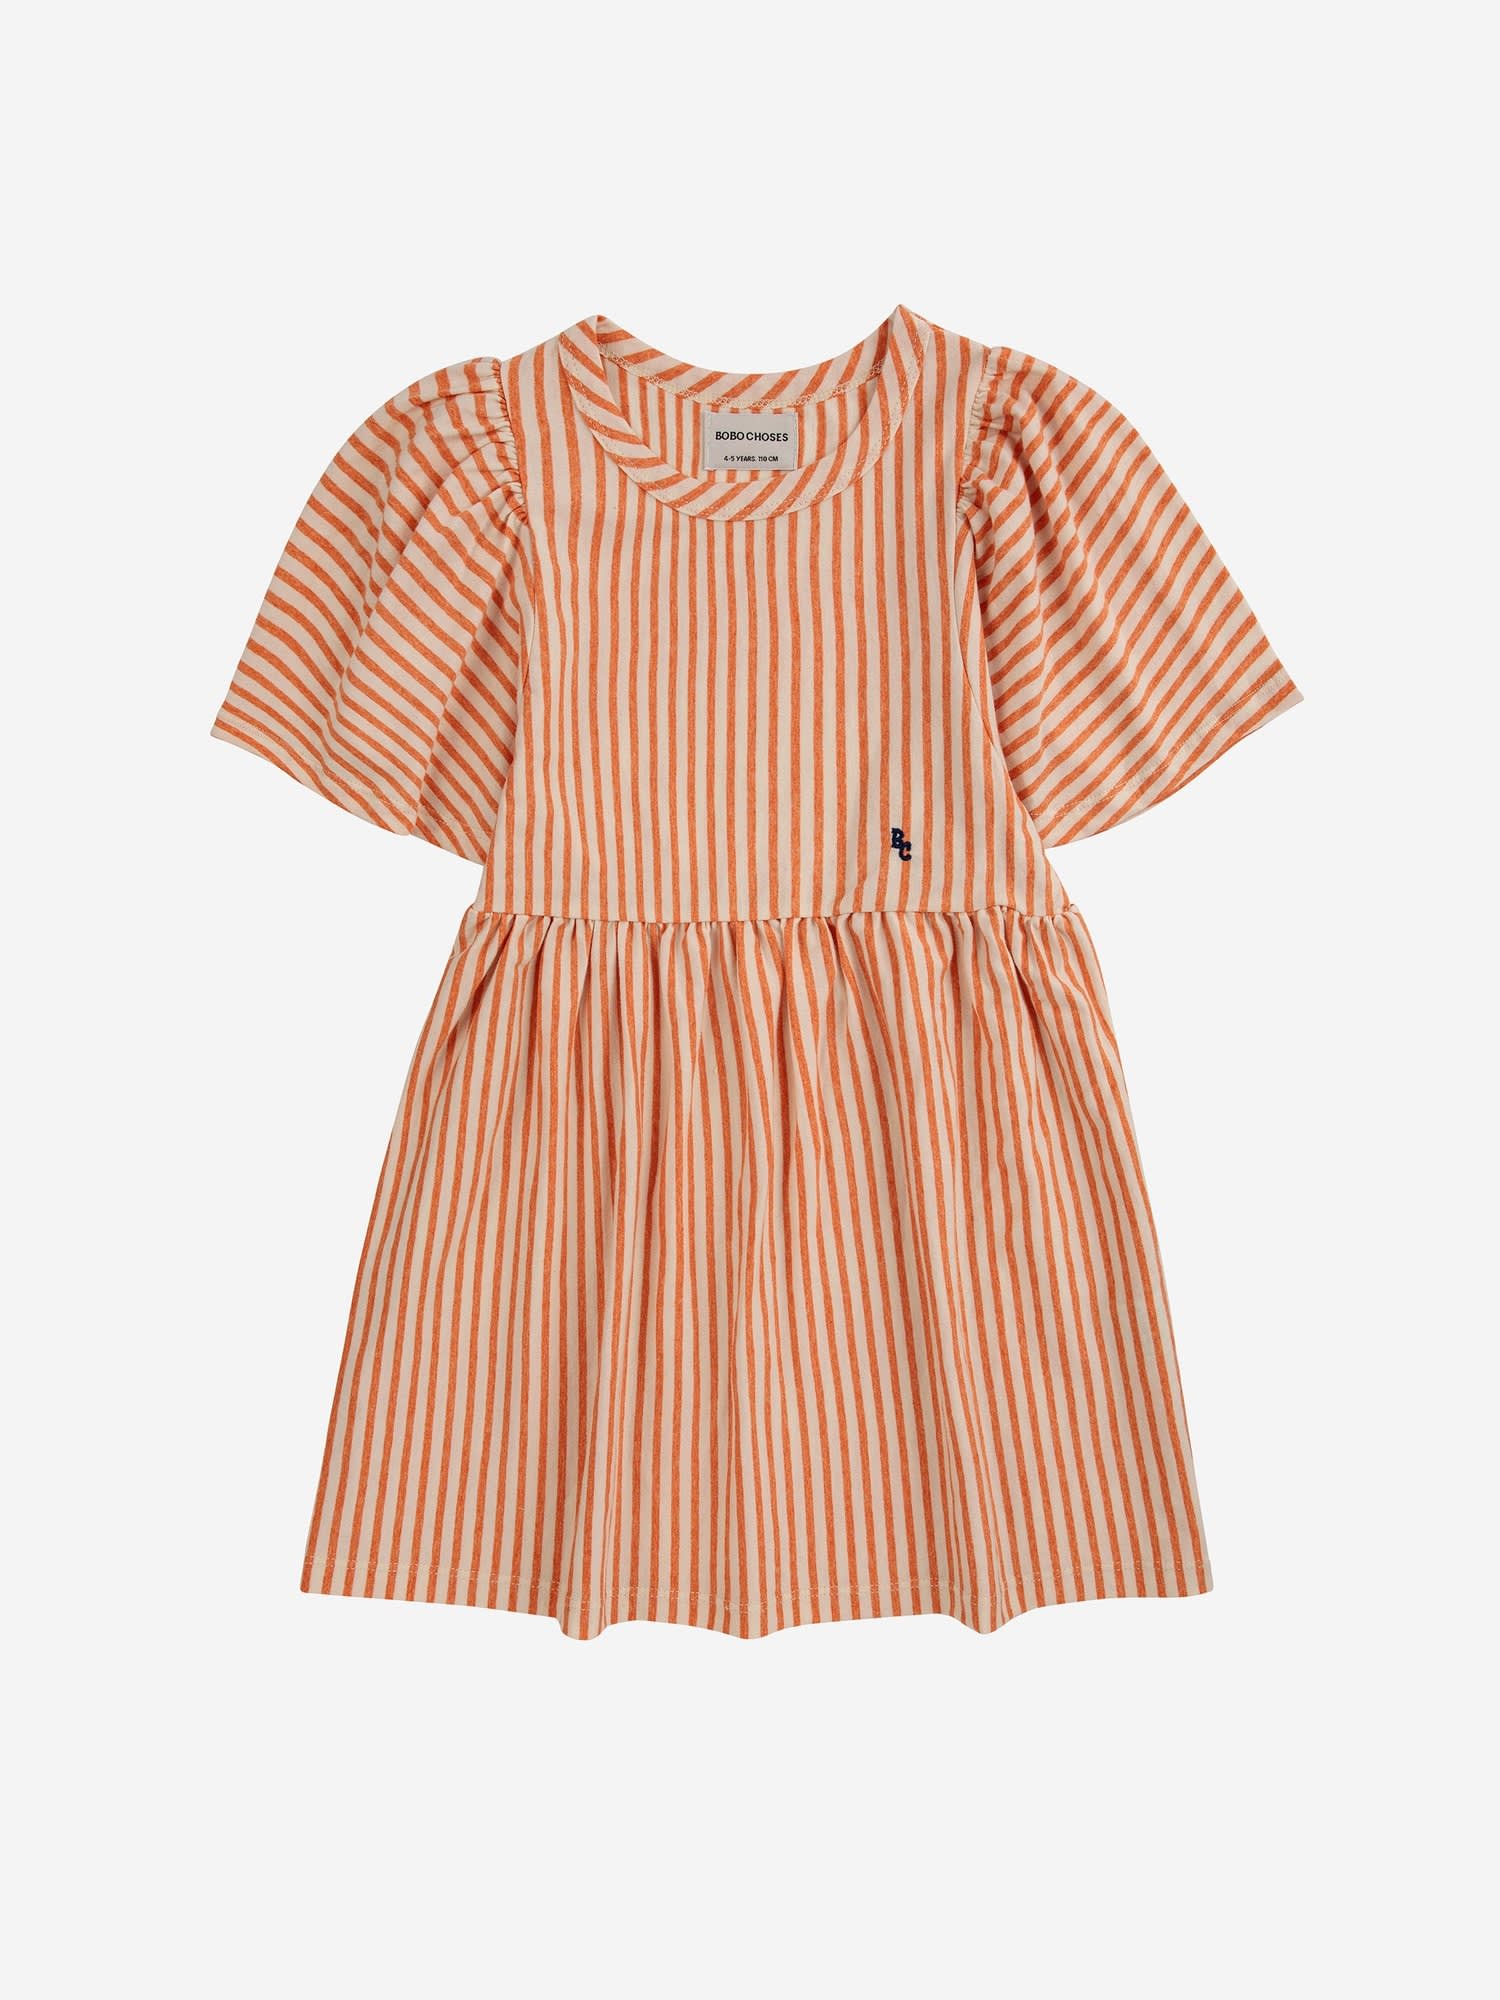 Bobo Choses Kids' Orange Dress For Girl With Stripes